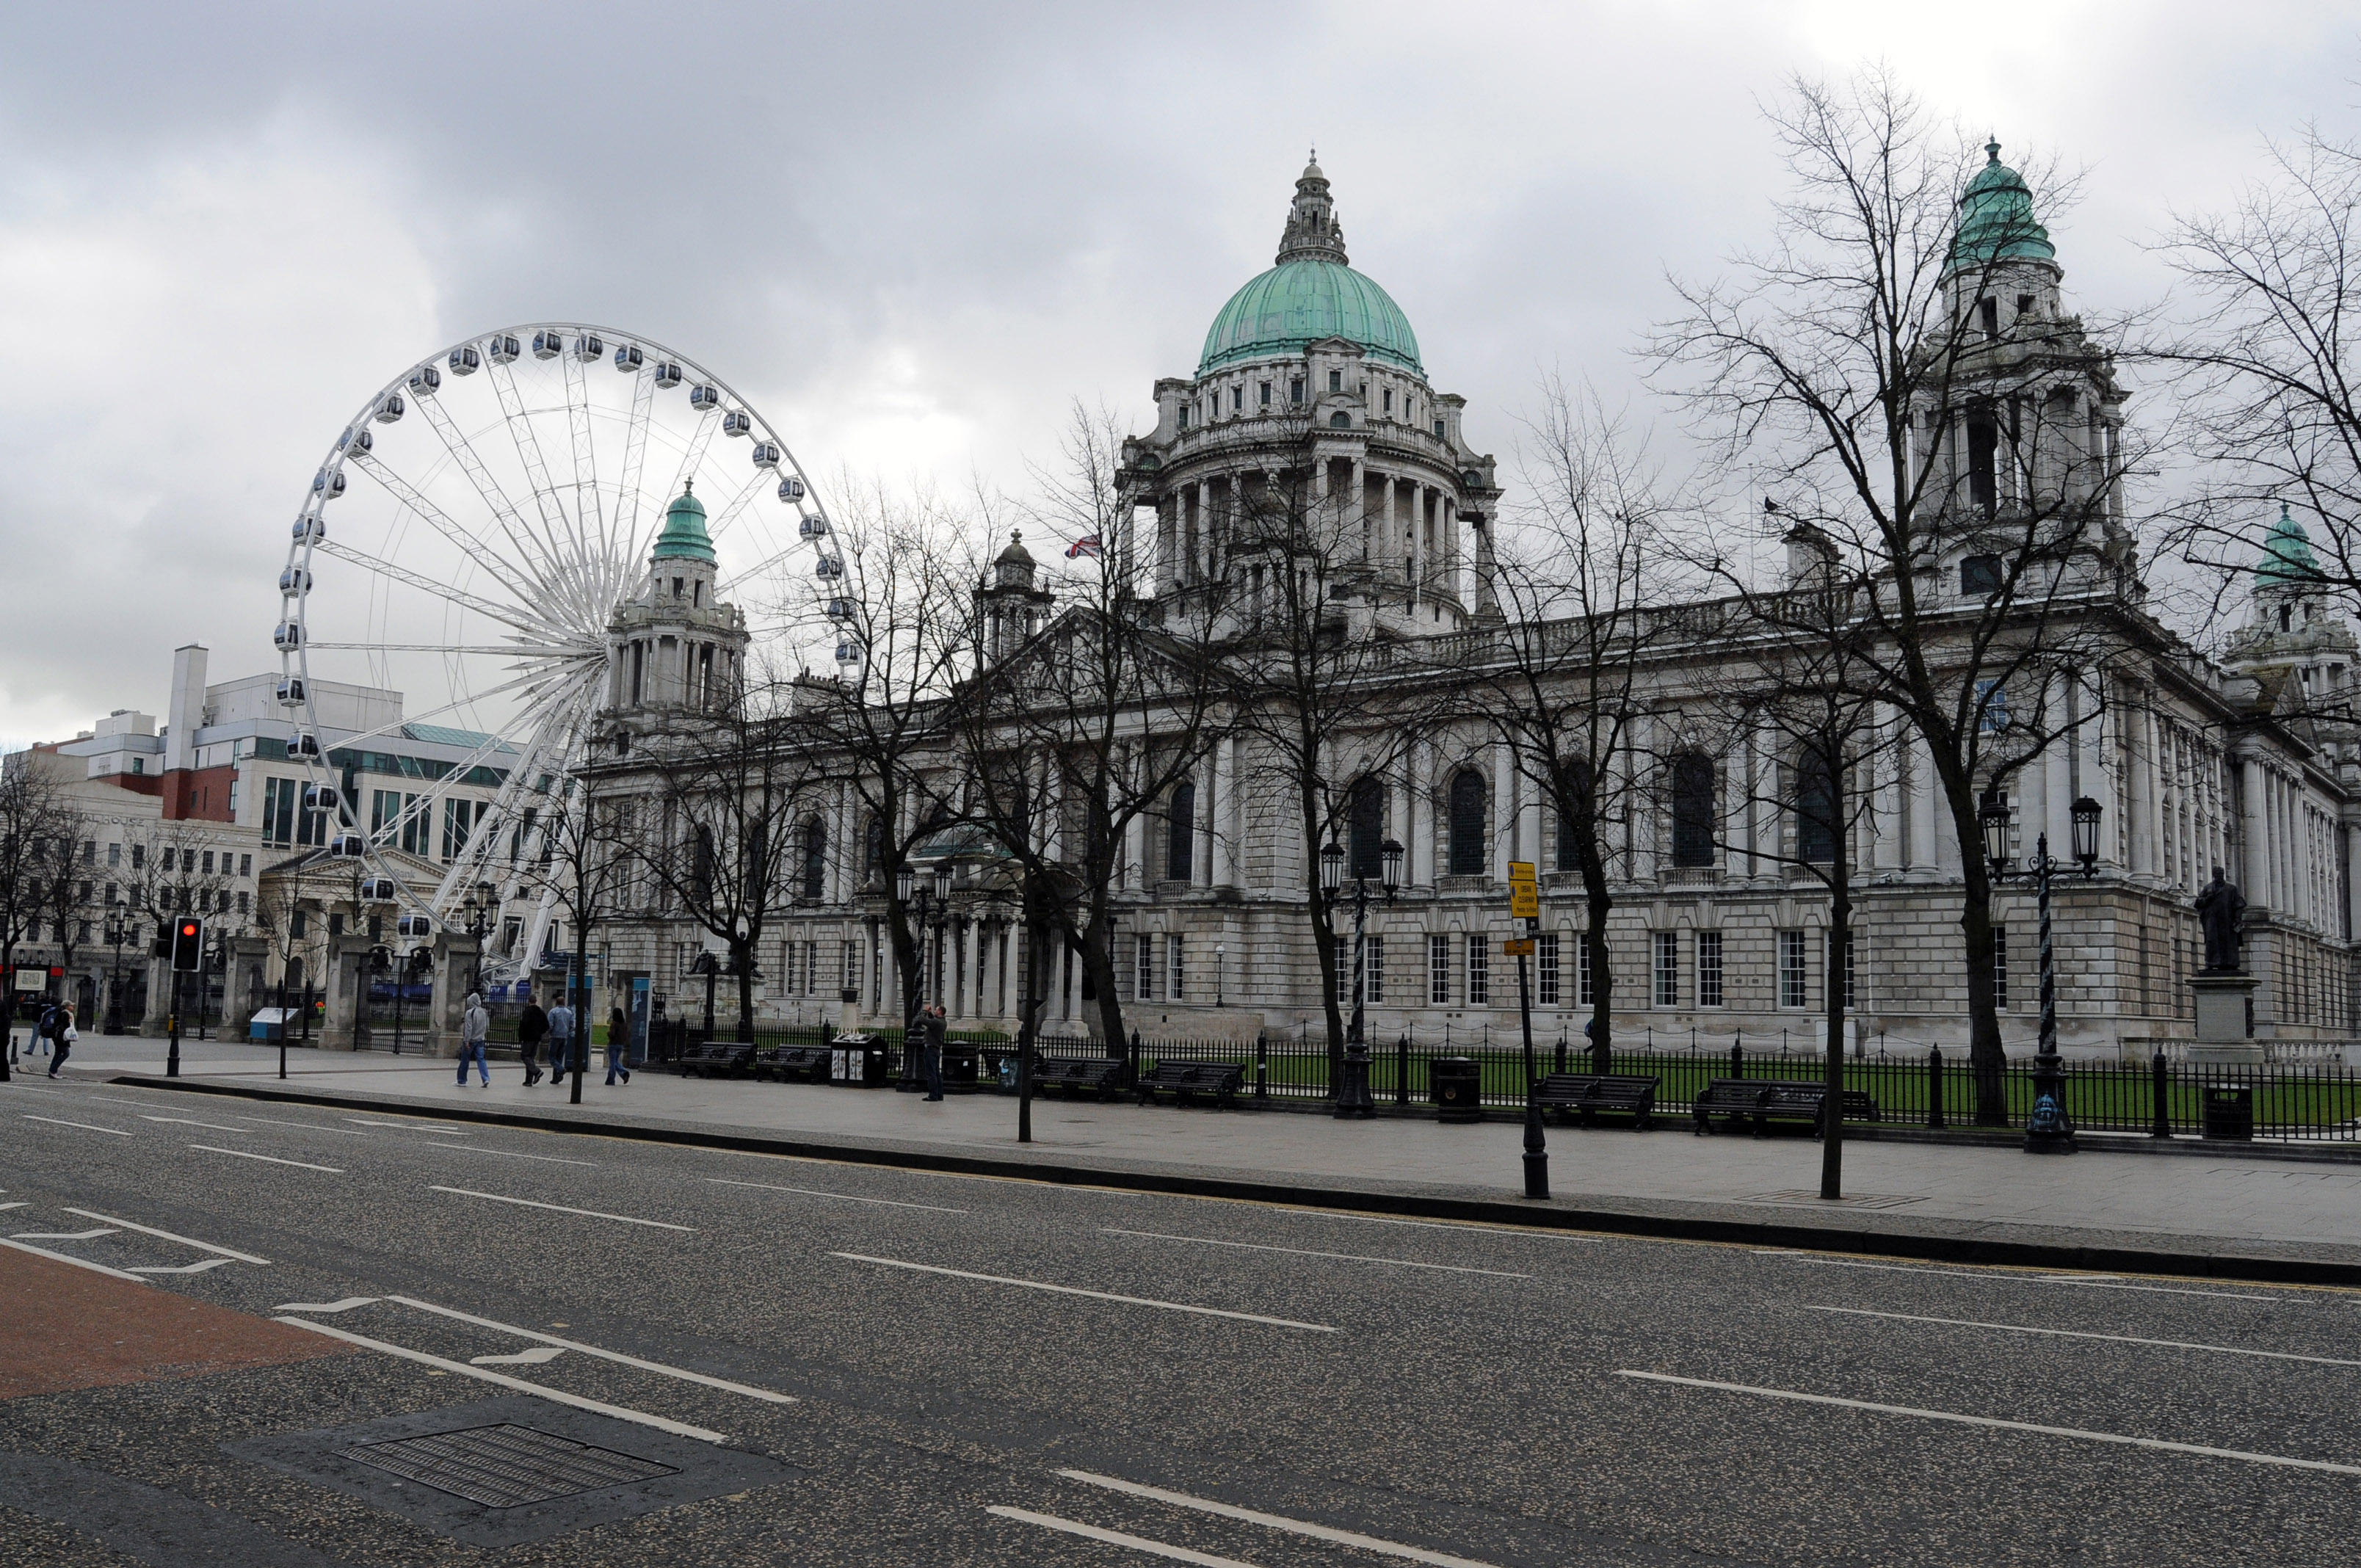 Belfast Wheel & City Center